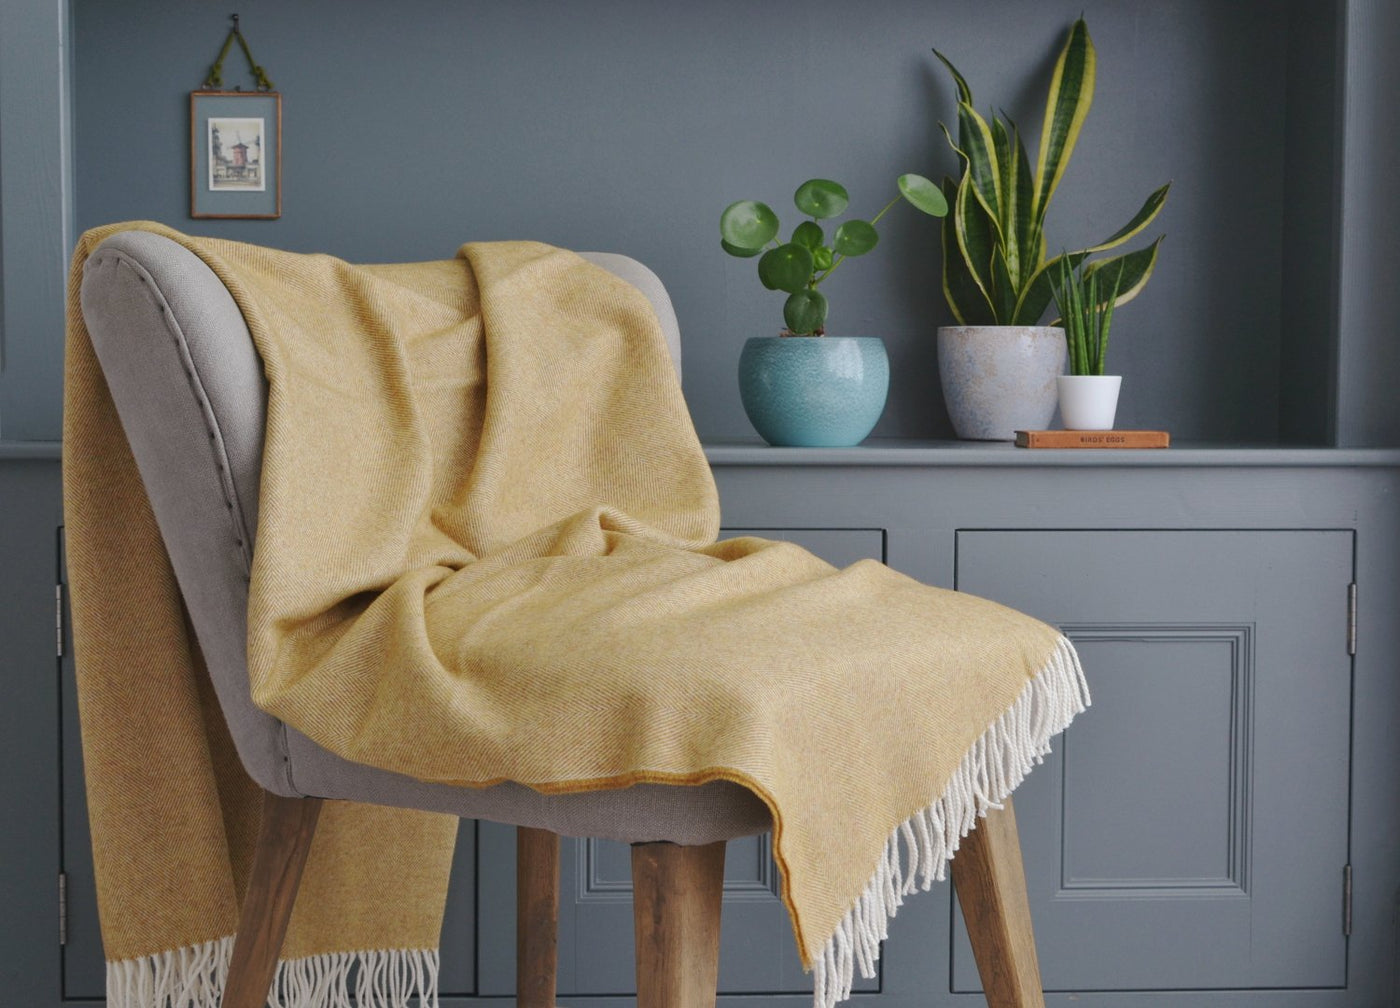 Extra large yellow merino herringbone wool blanket draped over a lounge chair